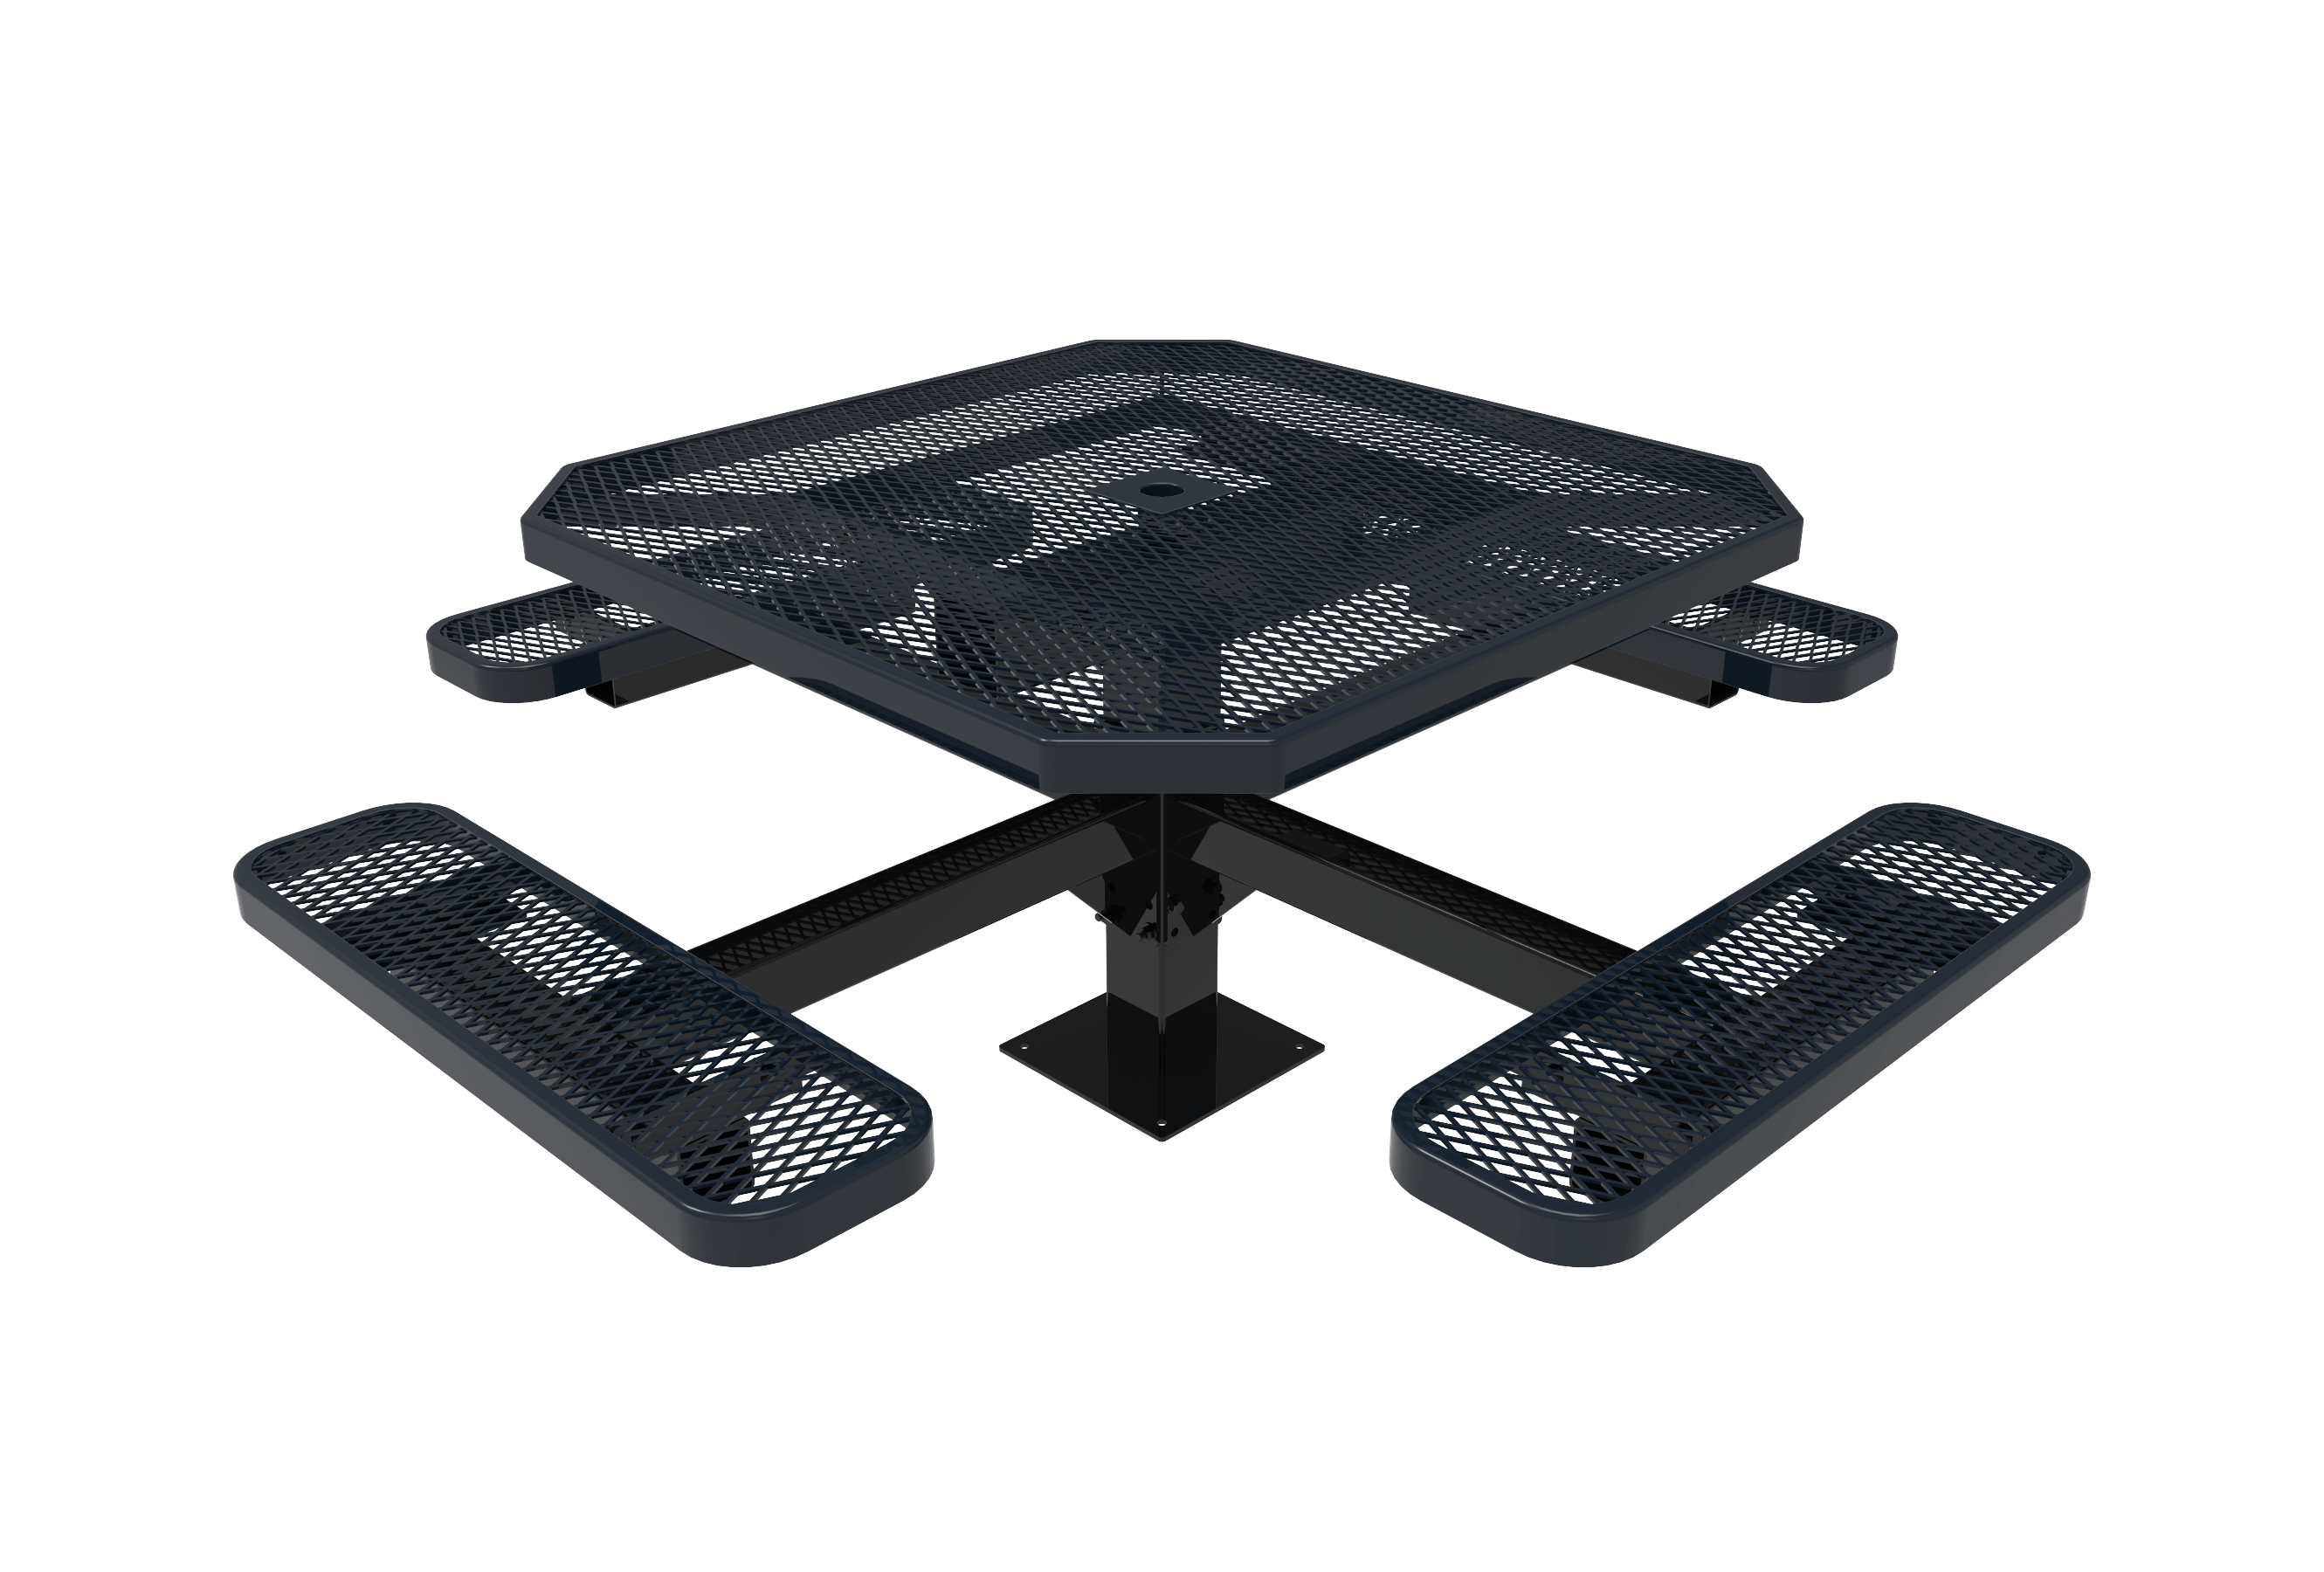 46″ Octagon Top Pedestal Surface Table 4 Seat-Mesh
TOT46-C-13-000
Industry Standard Finish
$1329.00
TOT46-A-13-000
Advantage Premium Finish
$1599.00
